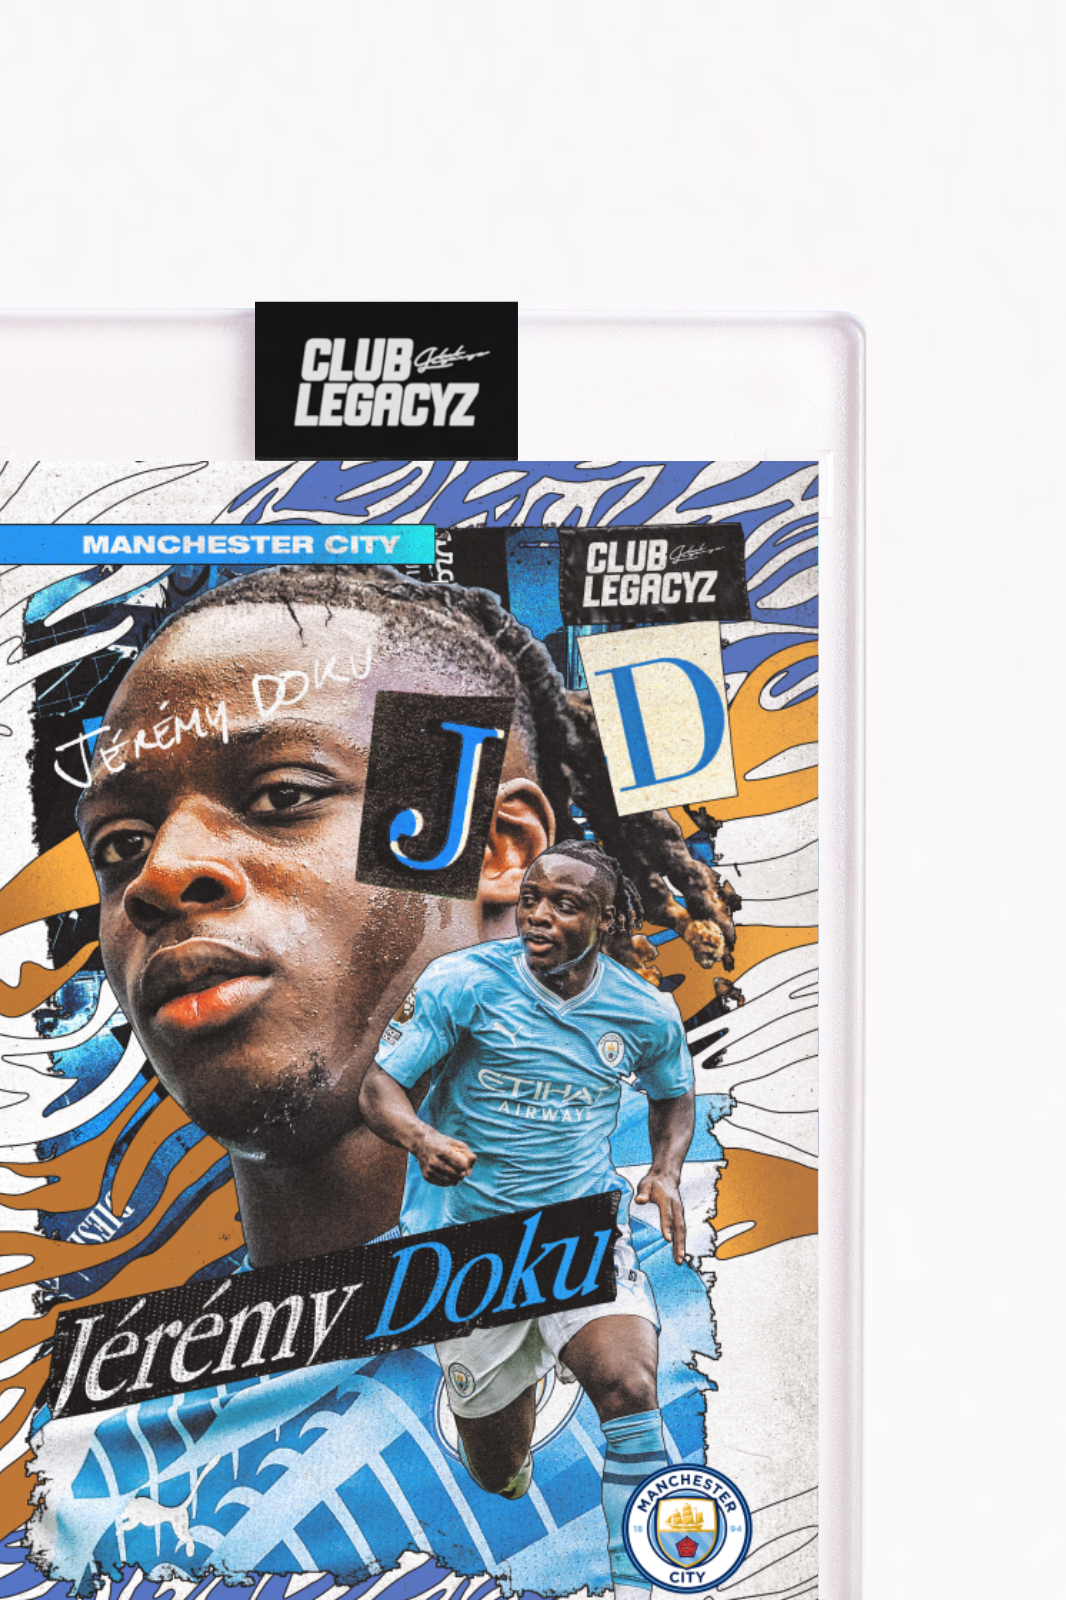 Manchester City - Jérémy Doku Icon limited to 999